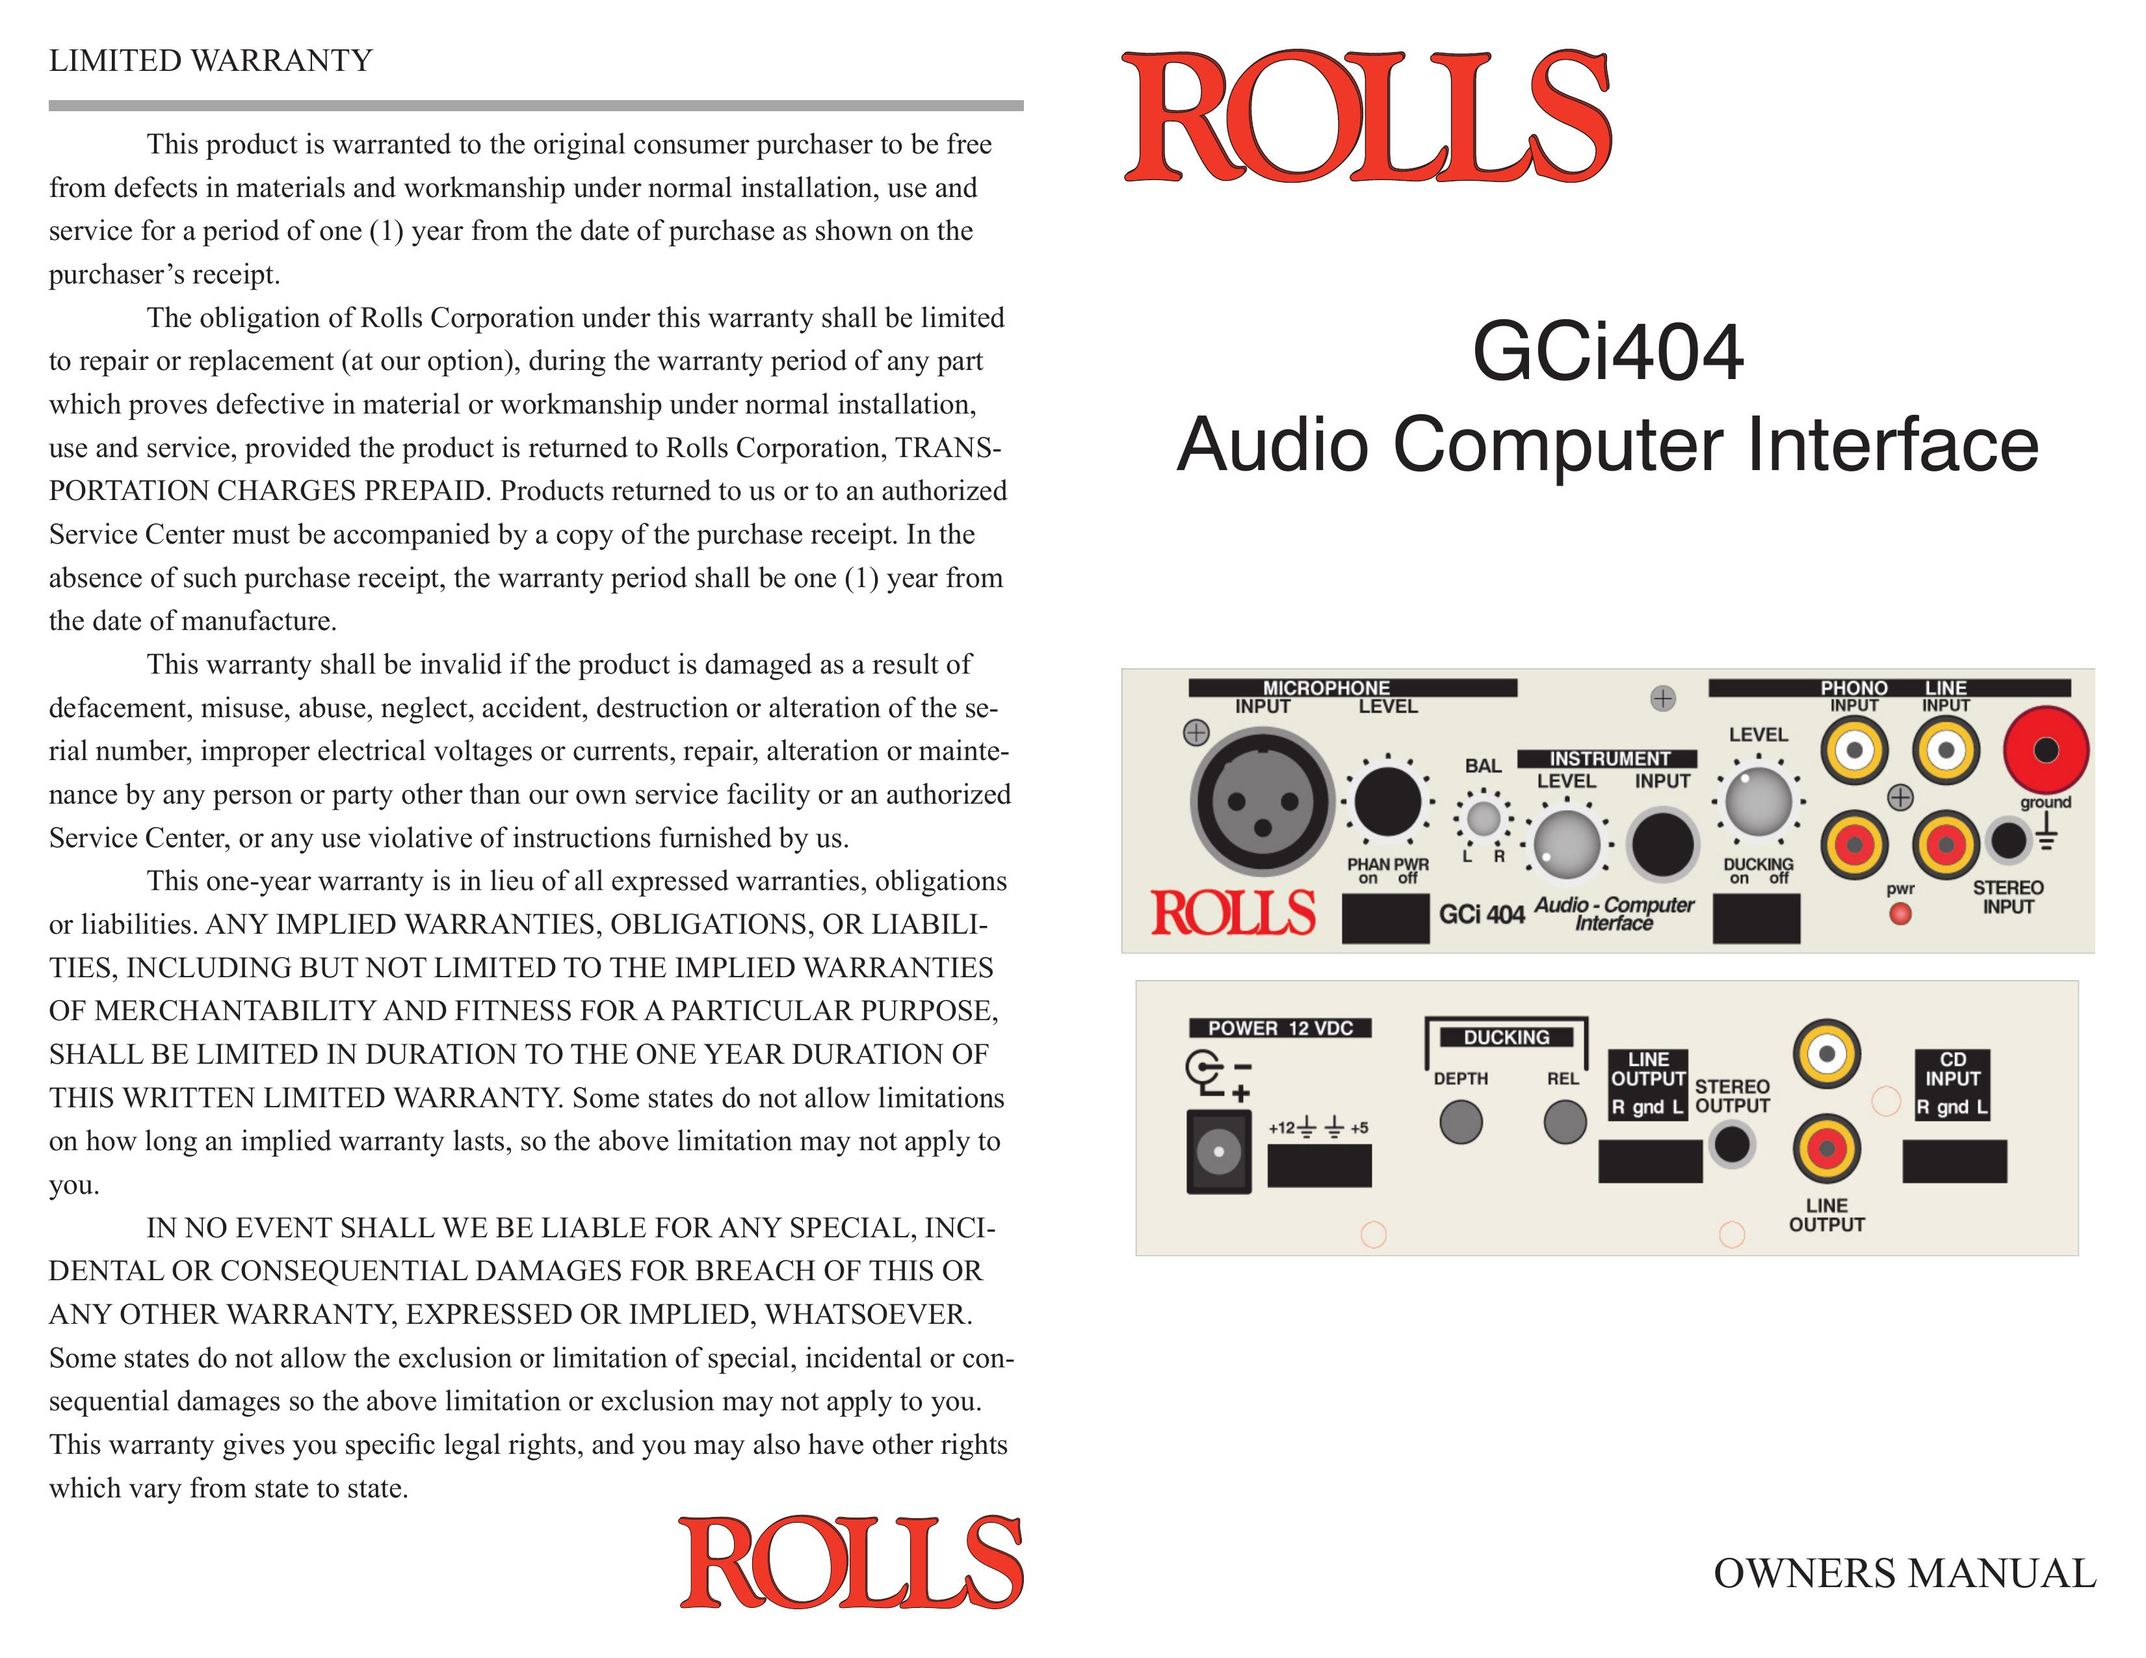 Rolls GCi404 Network Card User Manual